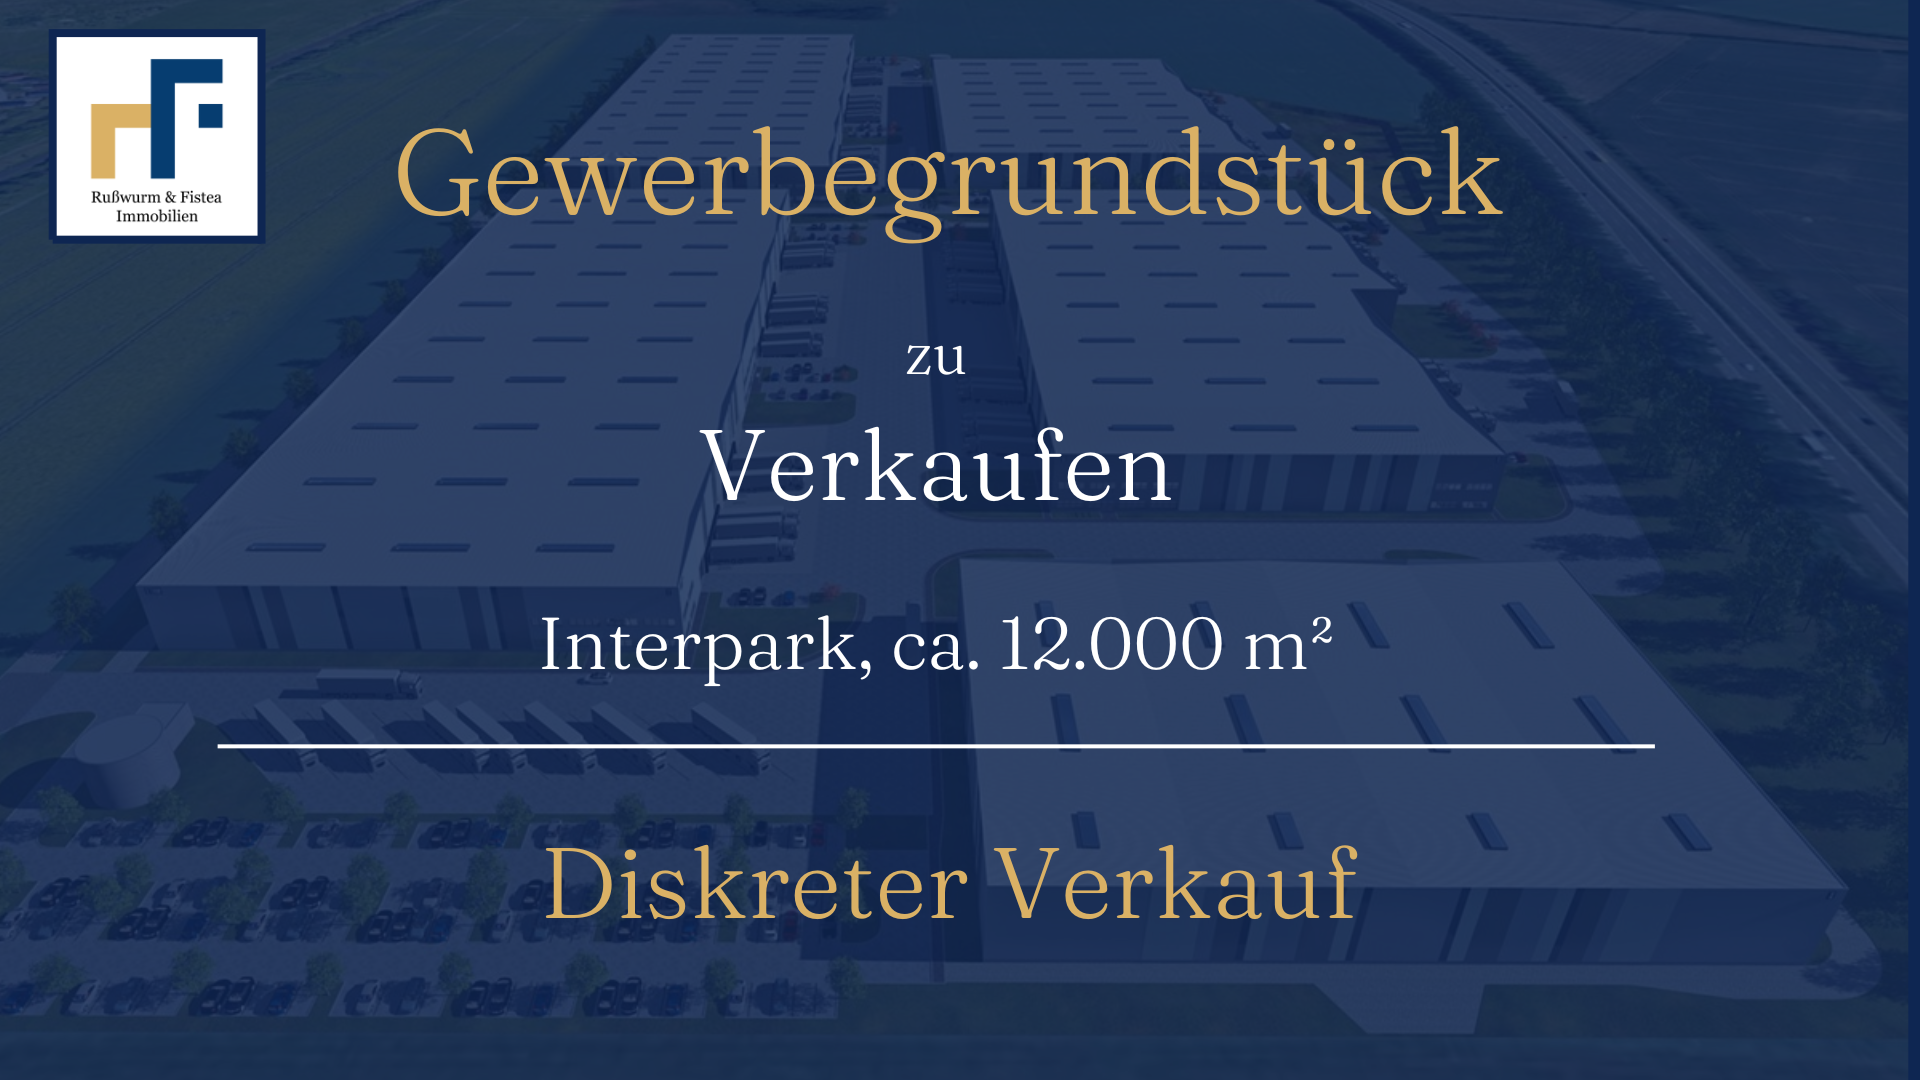 Gewerbegrundstück Interpark ca. 12.000 m²